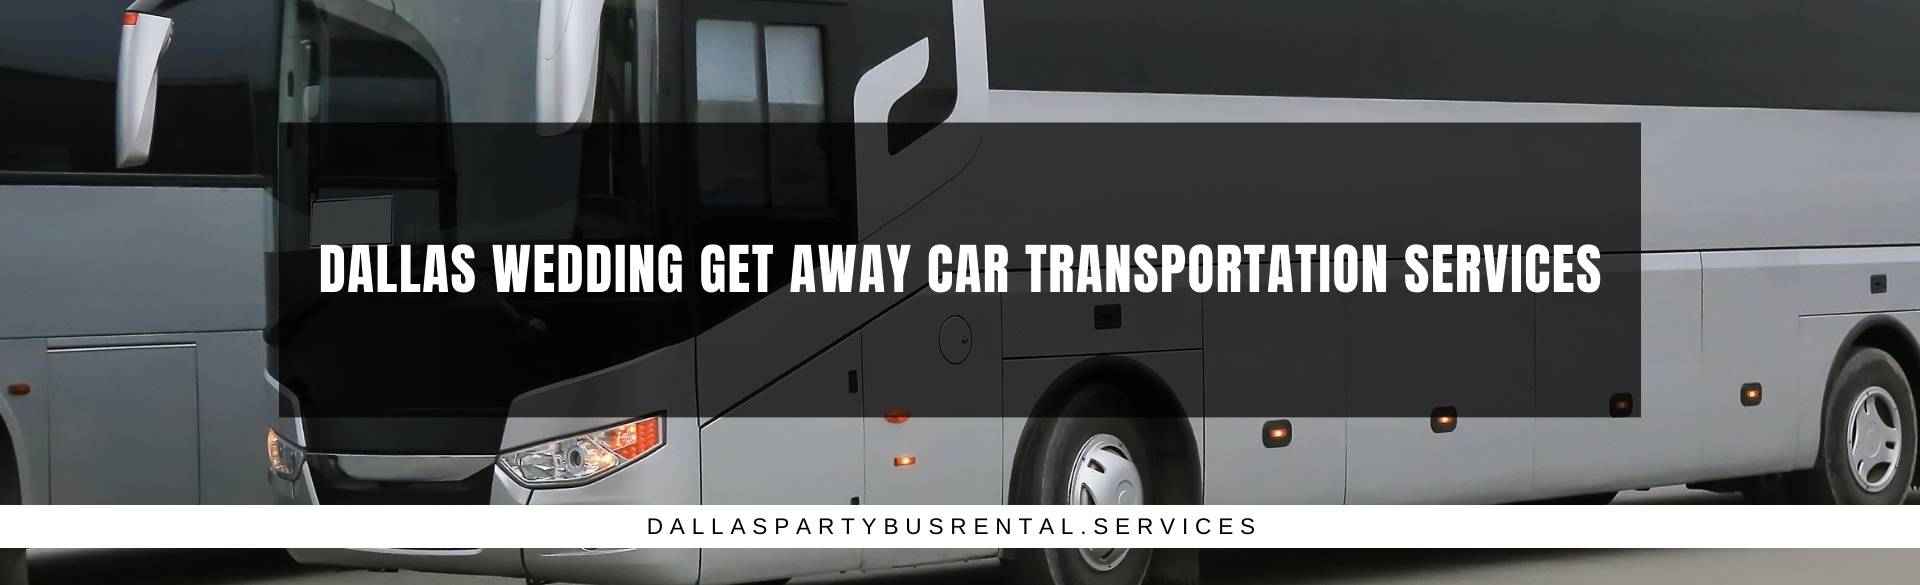 Dallas Wedding Get Away Car Transportation Services